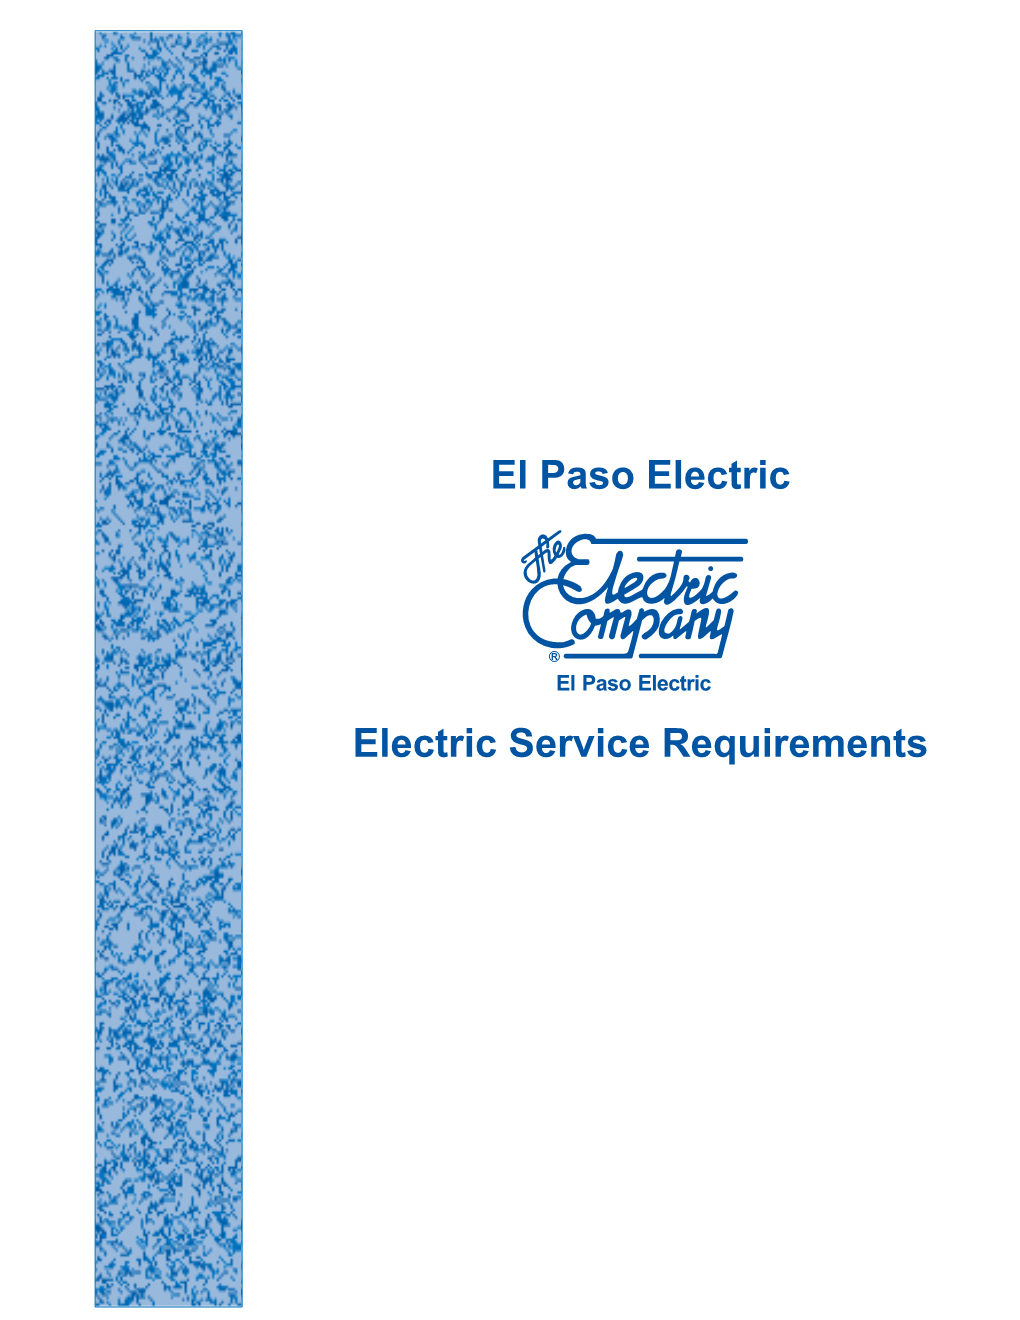 El Paso Electric Electric Service Requirements